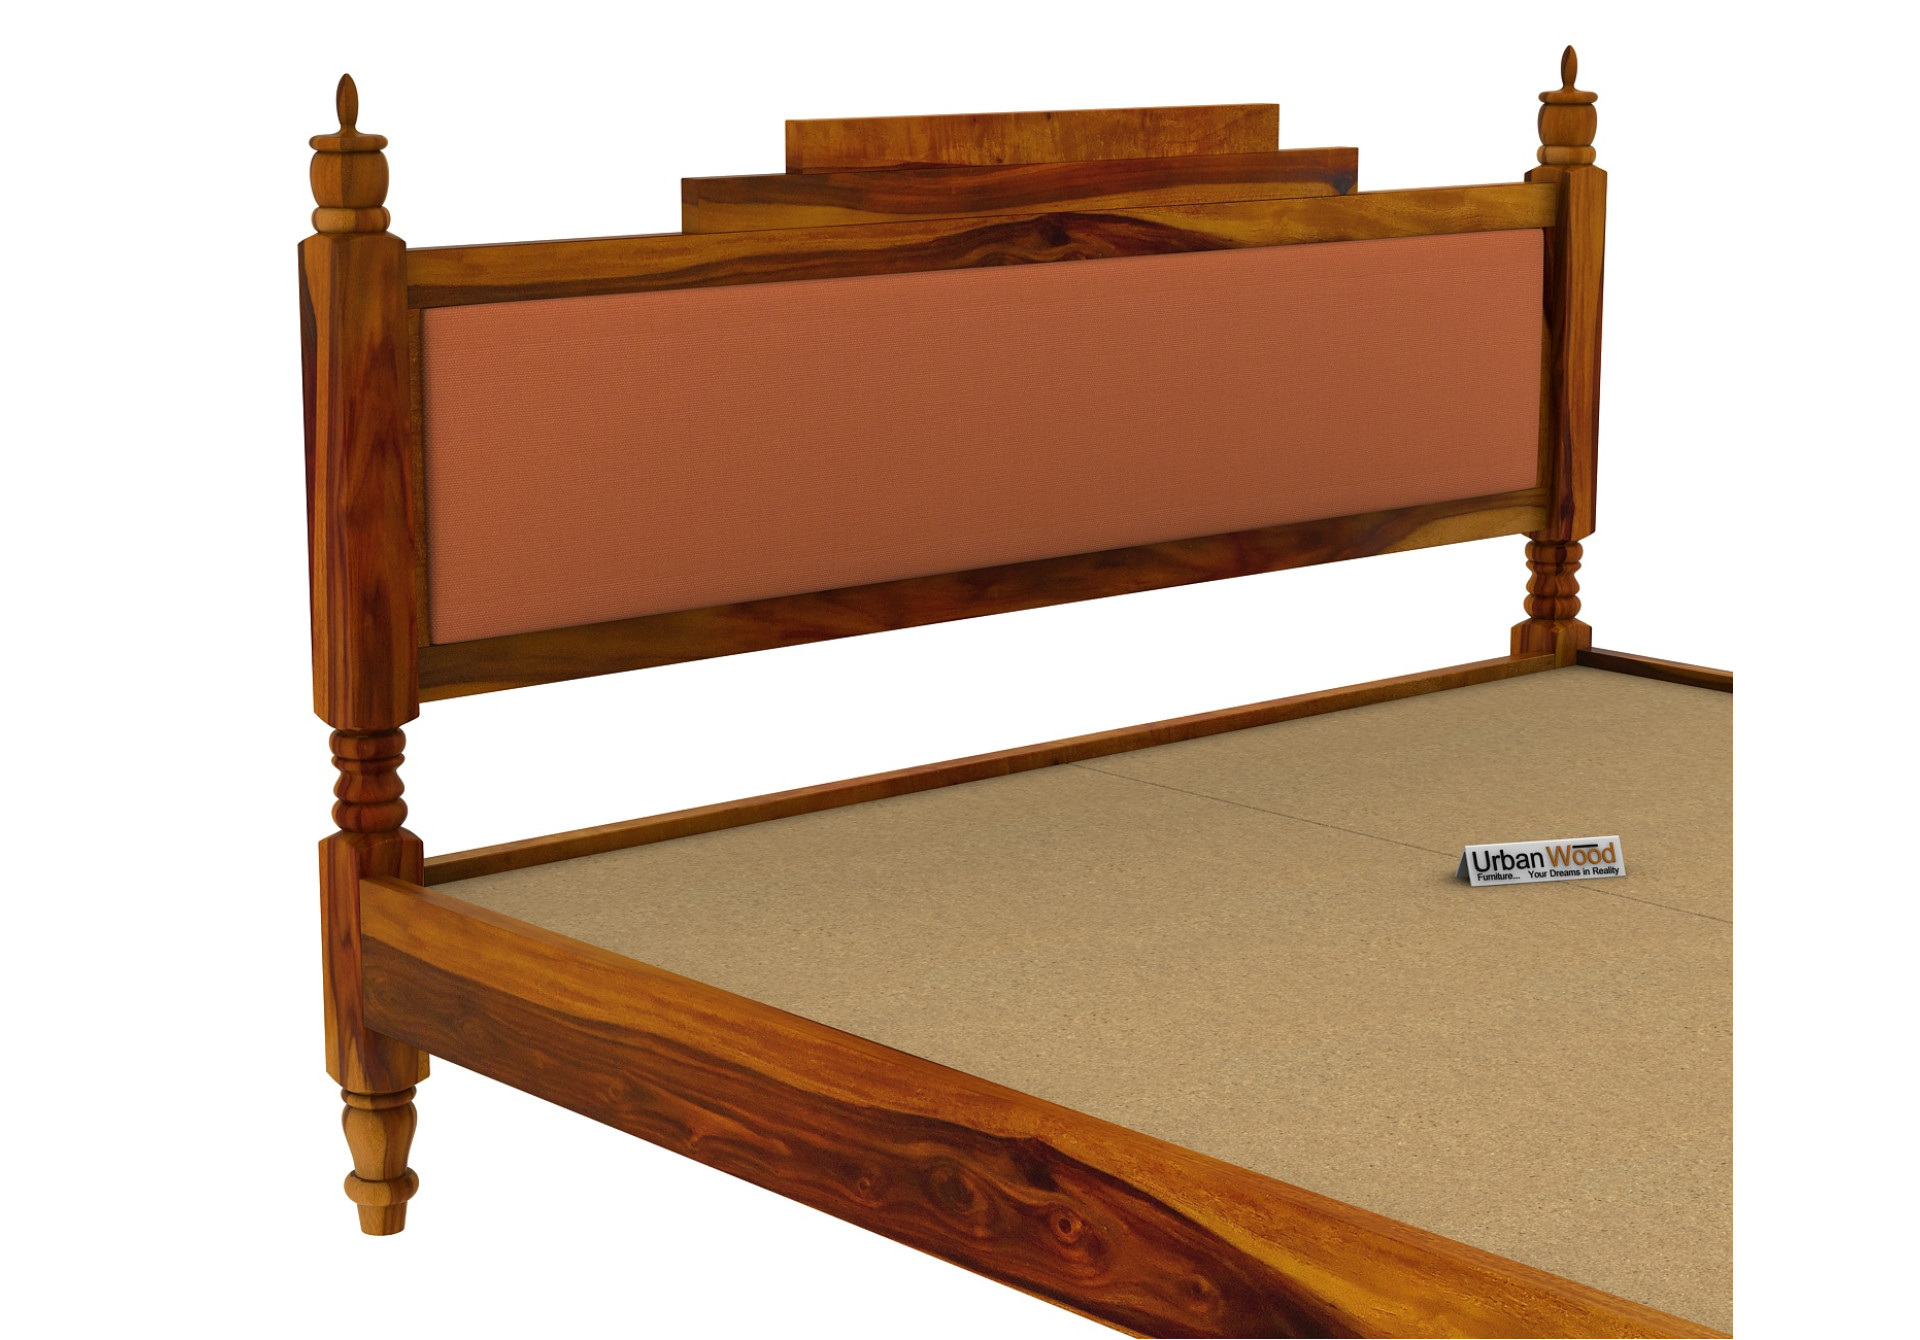 Jodhpuri Without Storage Bed (Queen Size, Honey Finish)